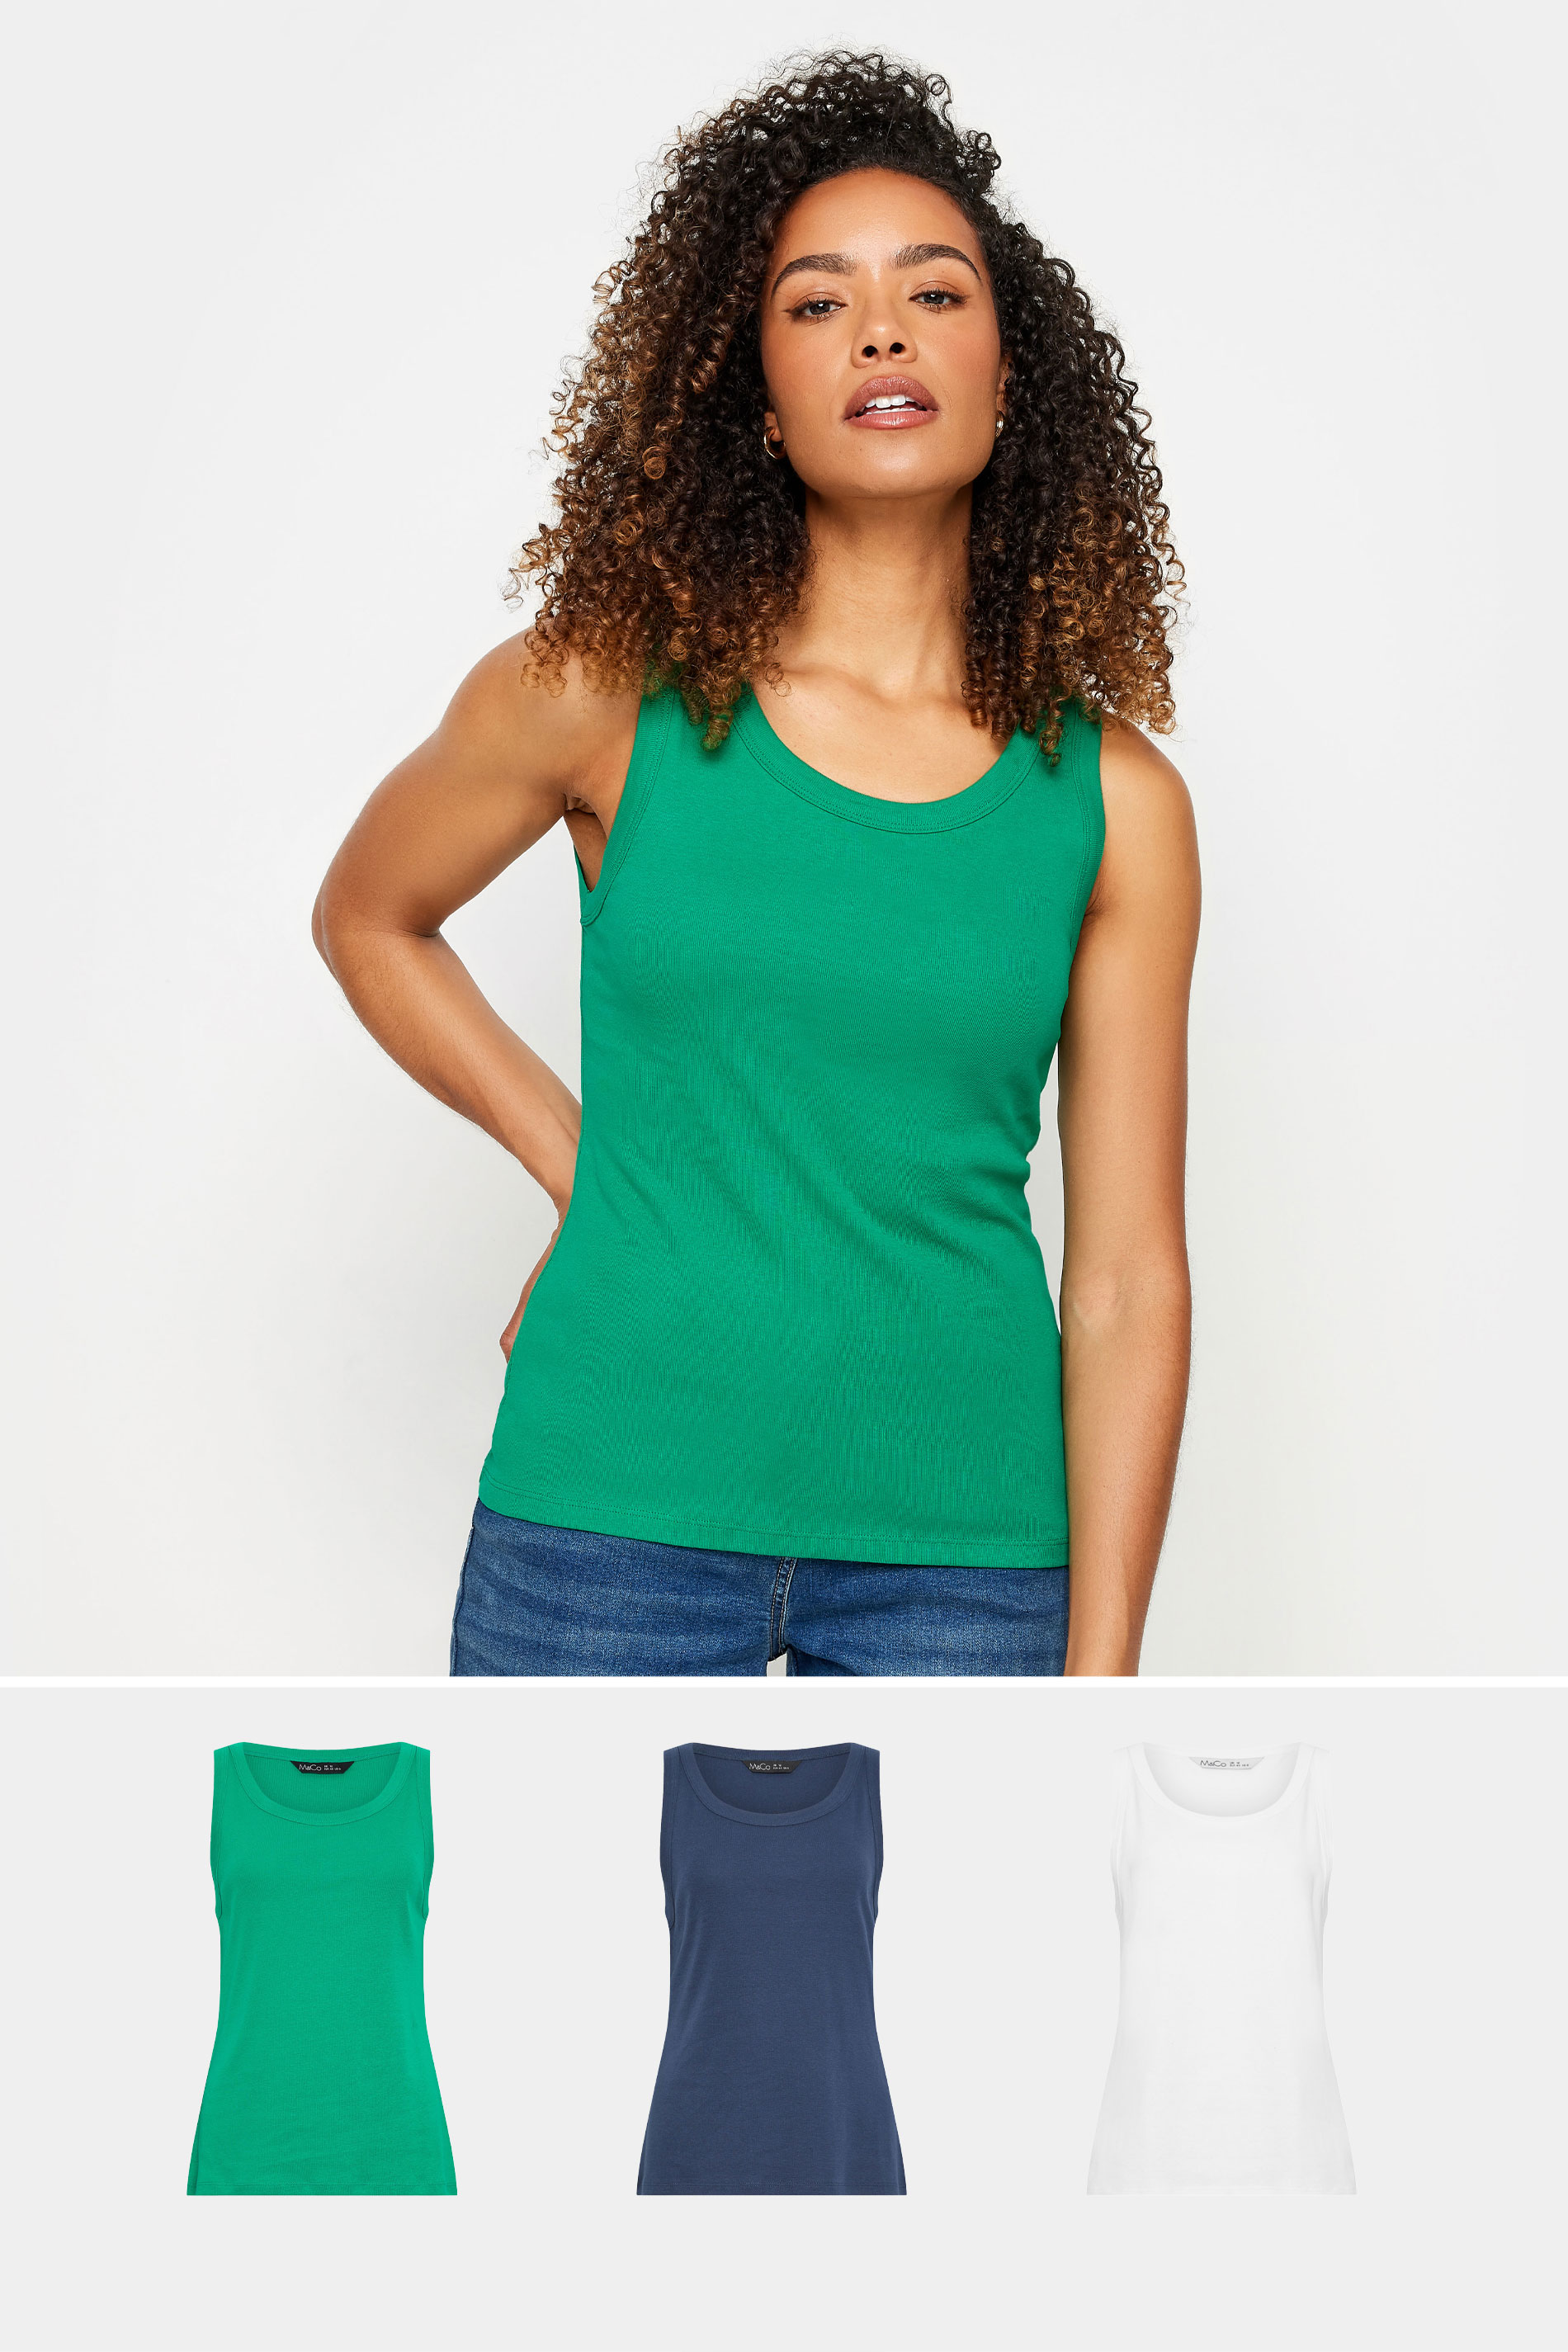 M&Co 3 PACK Green Blue & White Scoop Neck Cotton Vest Tops | M&Co 1